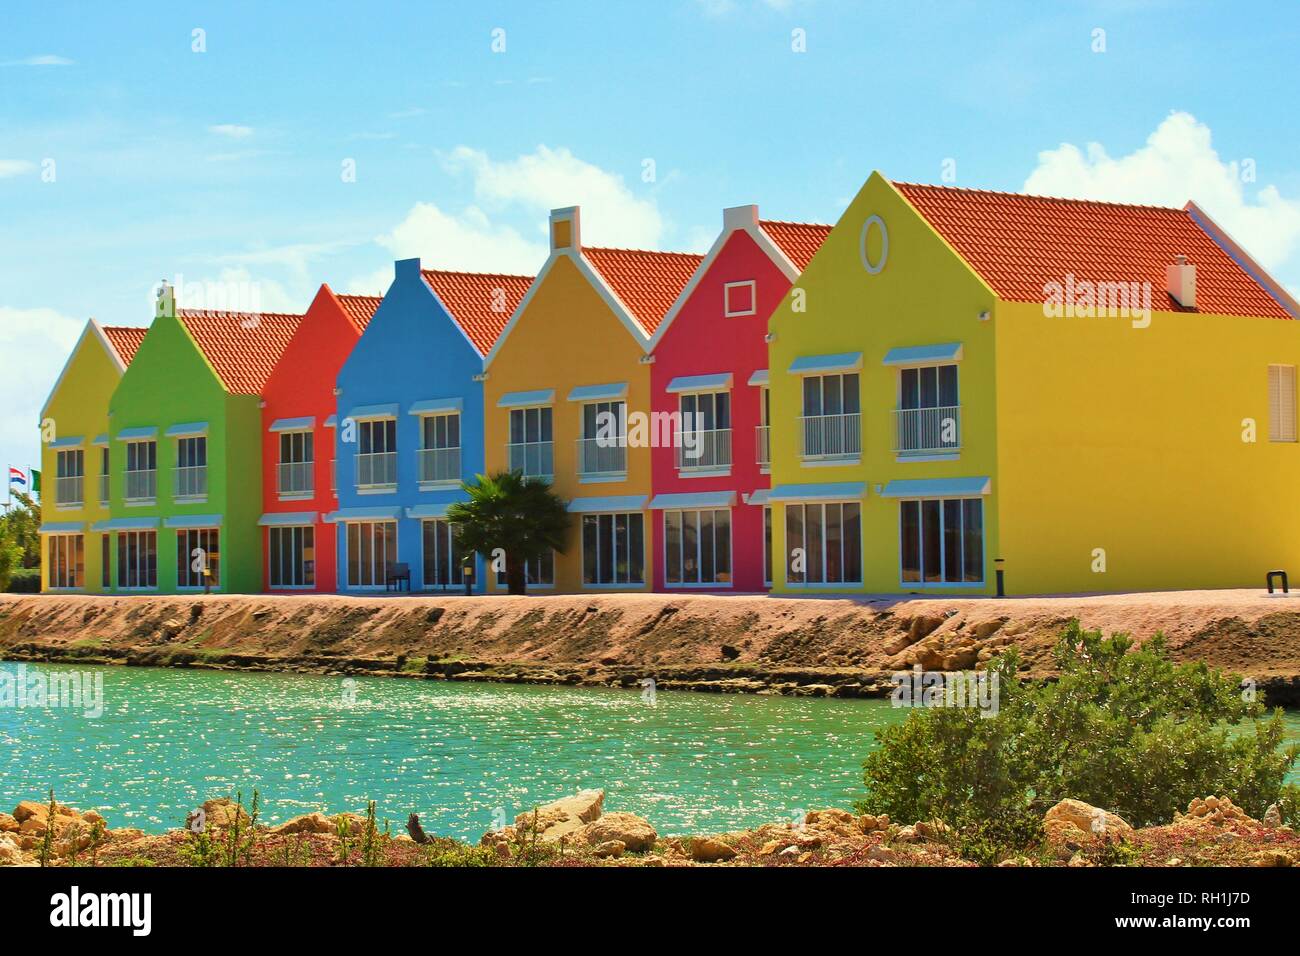 Kralendijk, Bonaire, Caribbean - February 22nd 2018: The colorful, newly built Courtyard Village tourist accommodation complex. Stock Photo